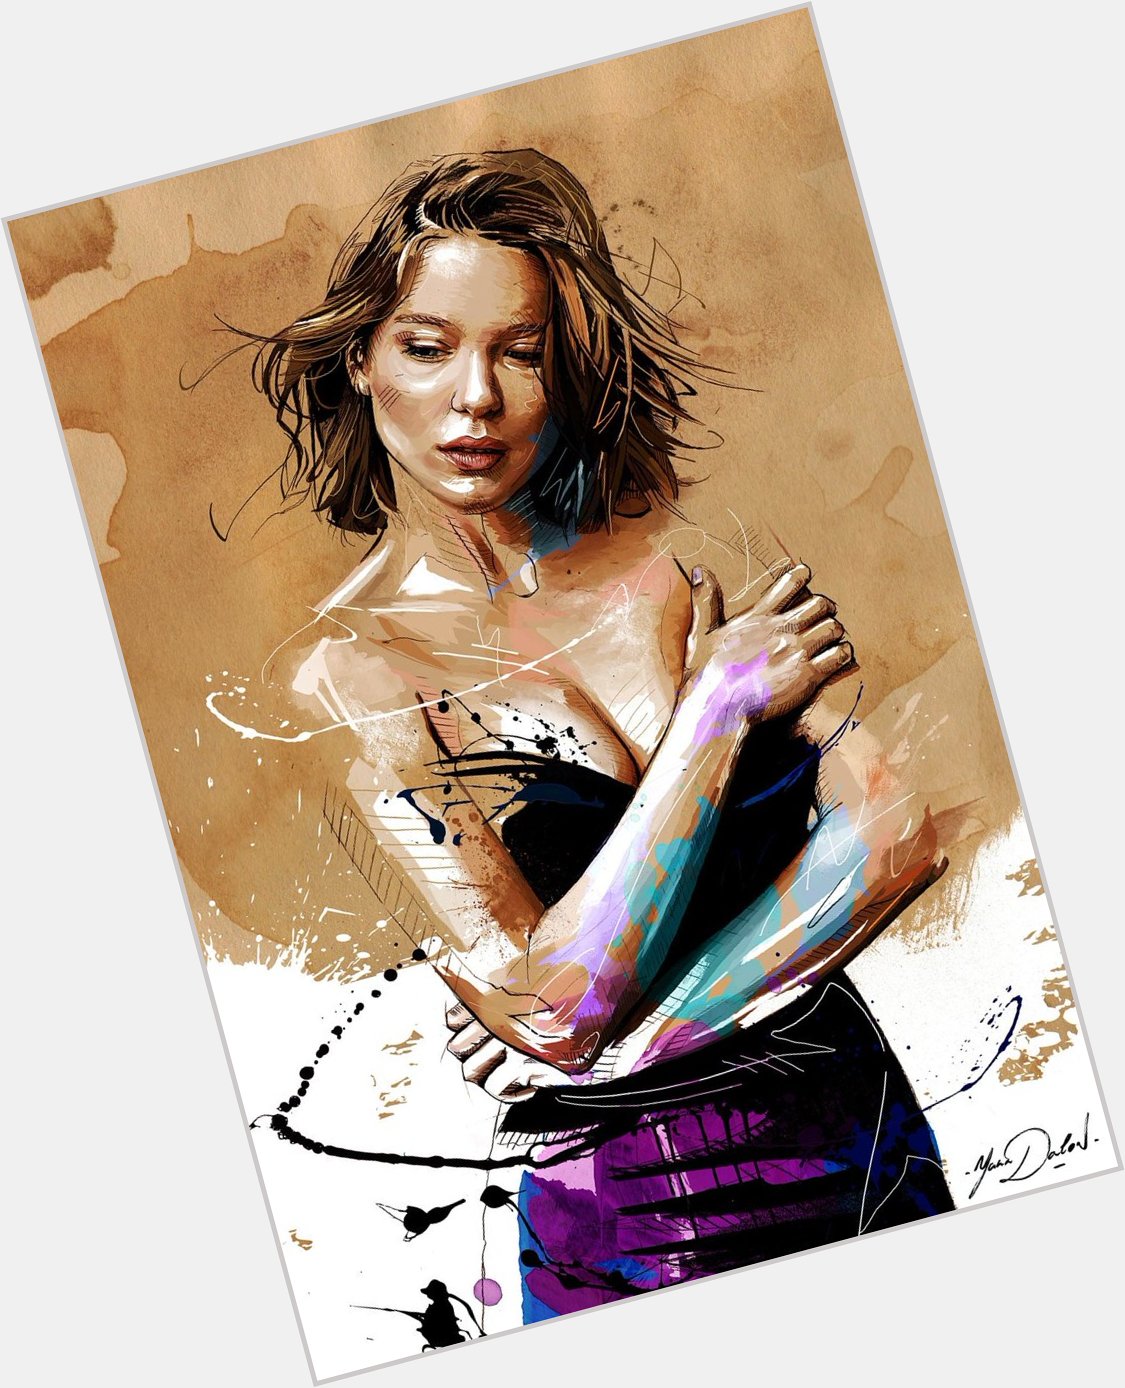 Happy Birthday Lea Seydoux. This beautiful artwork is by 